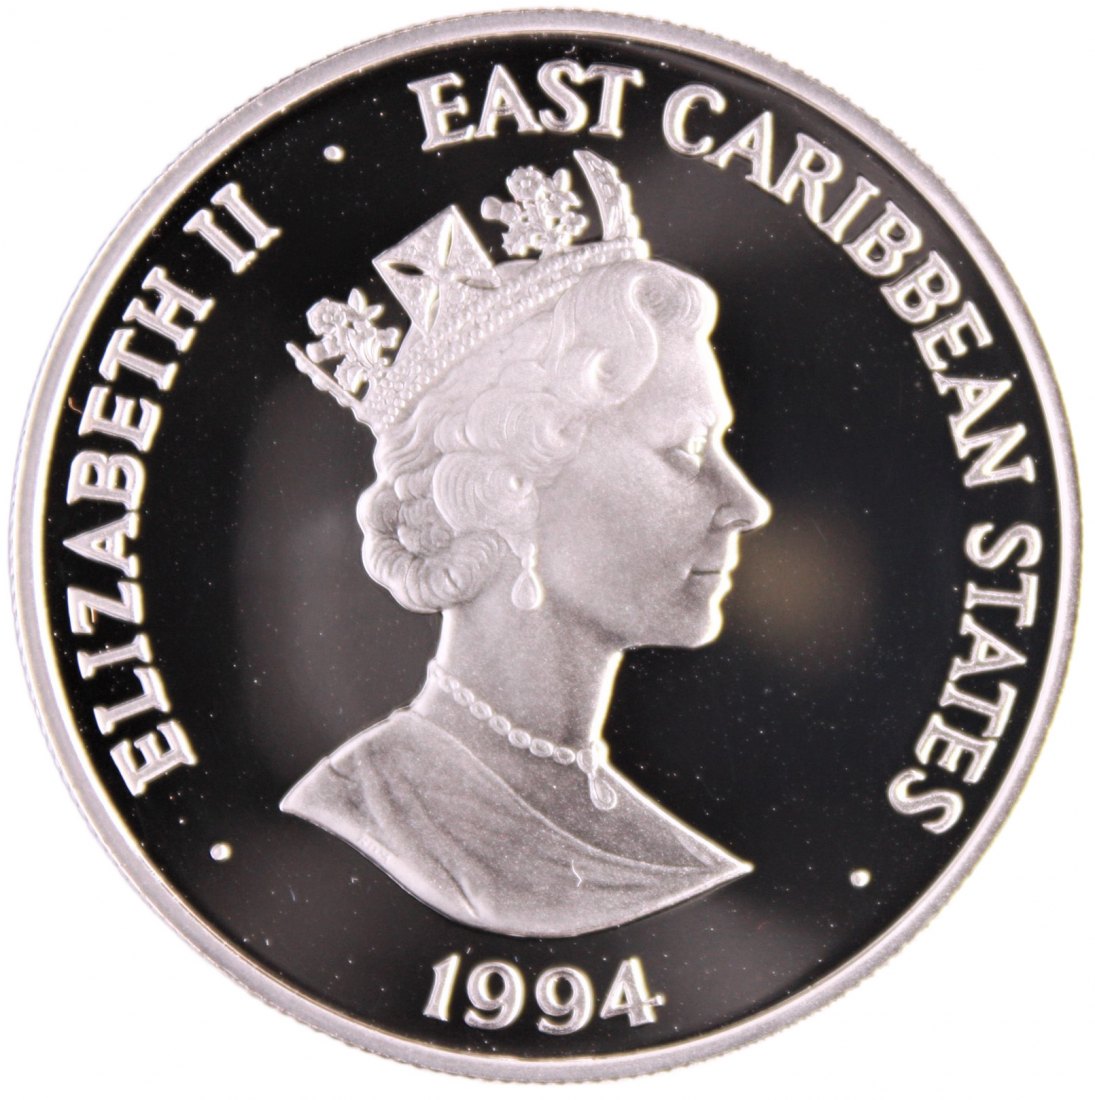  East Carribean States: 10 $ 1994, 31,47 gr. 925er Silber, pp, nur 10.000 Ex.   